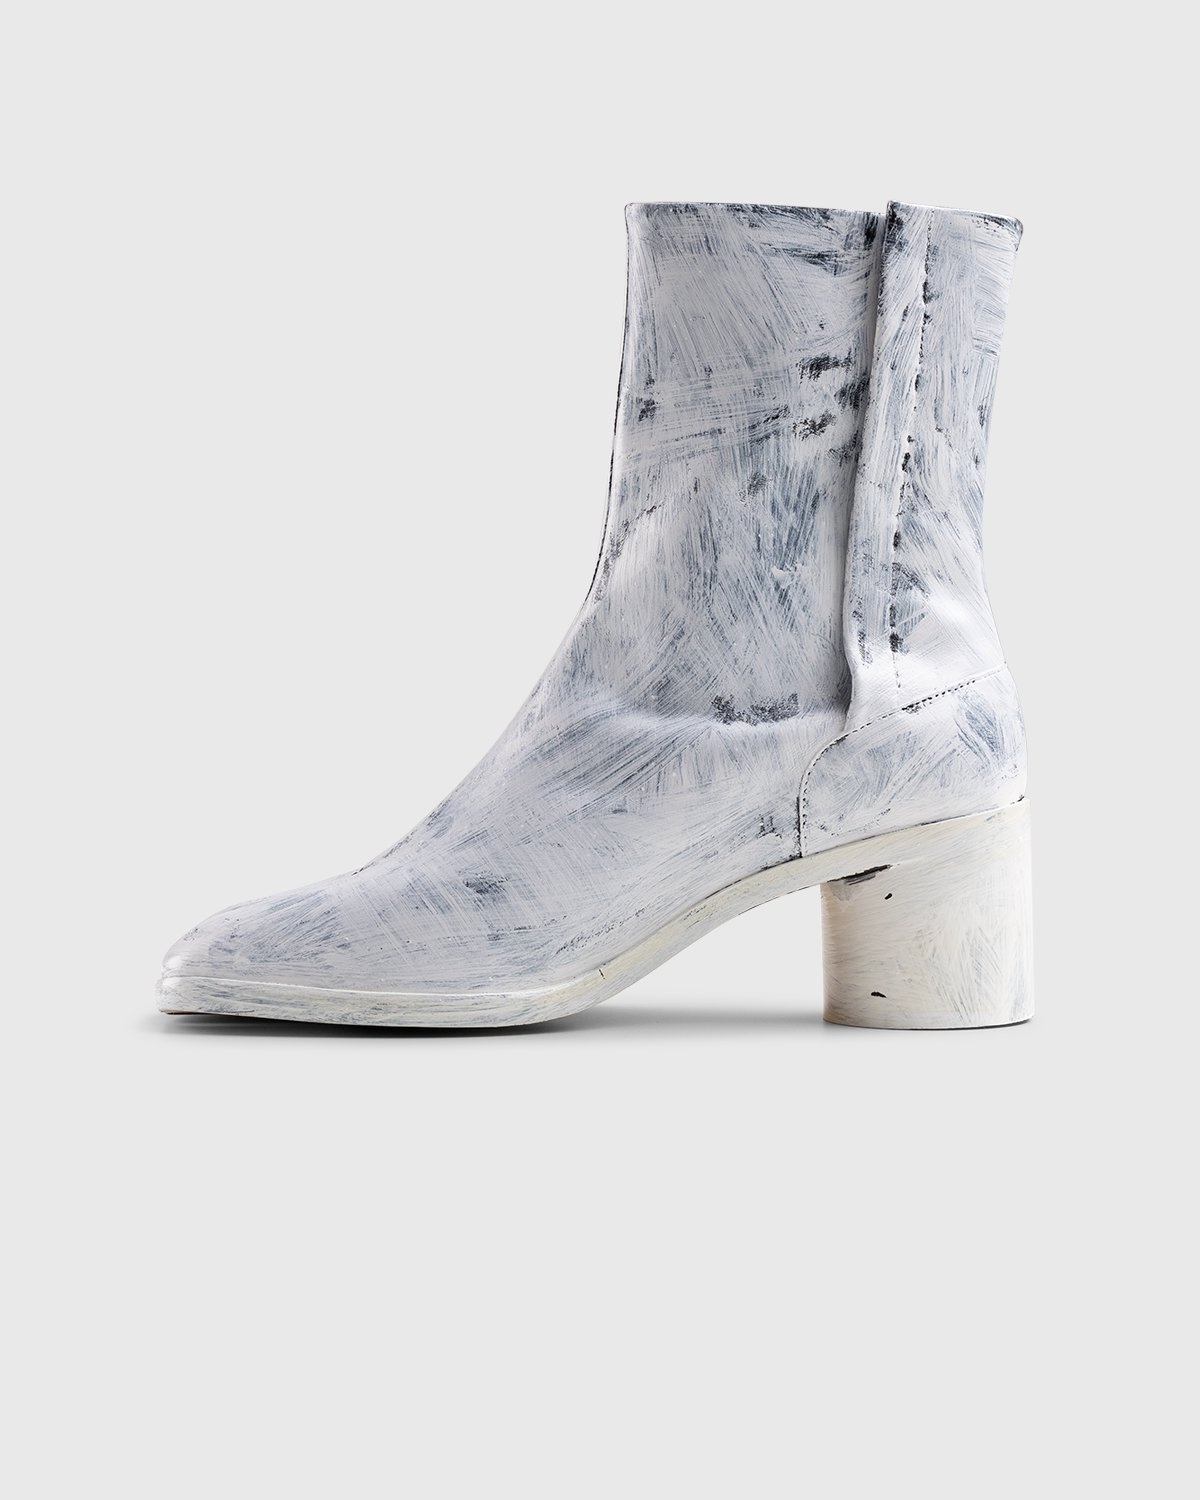 Maison Margiela – Tabi Bianchetto Chelsea Boots White - Heels - White - Image 7